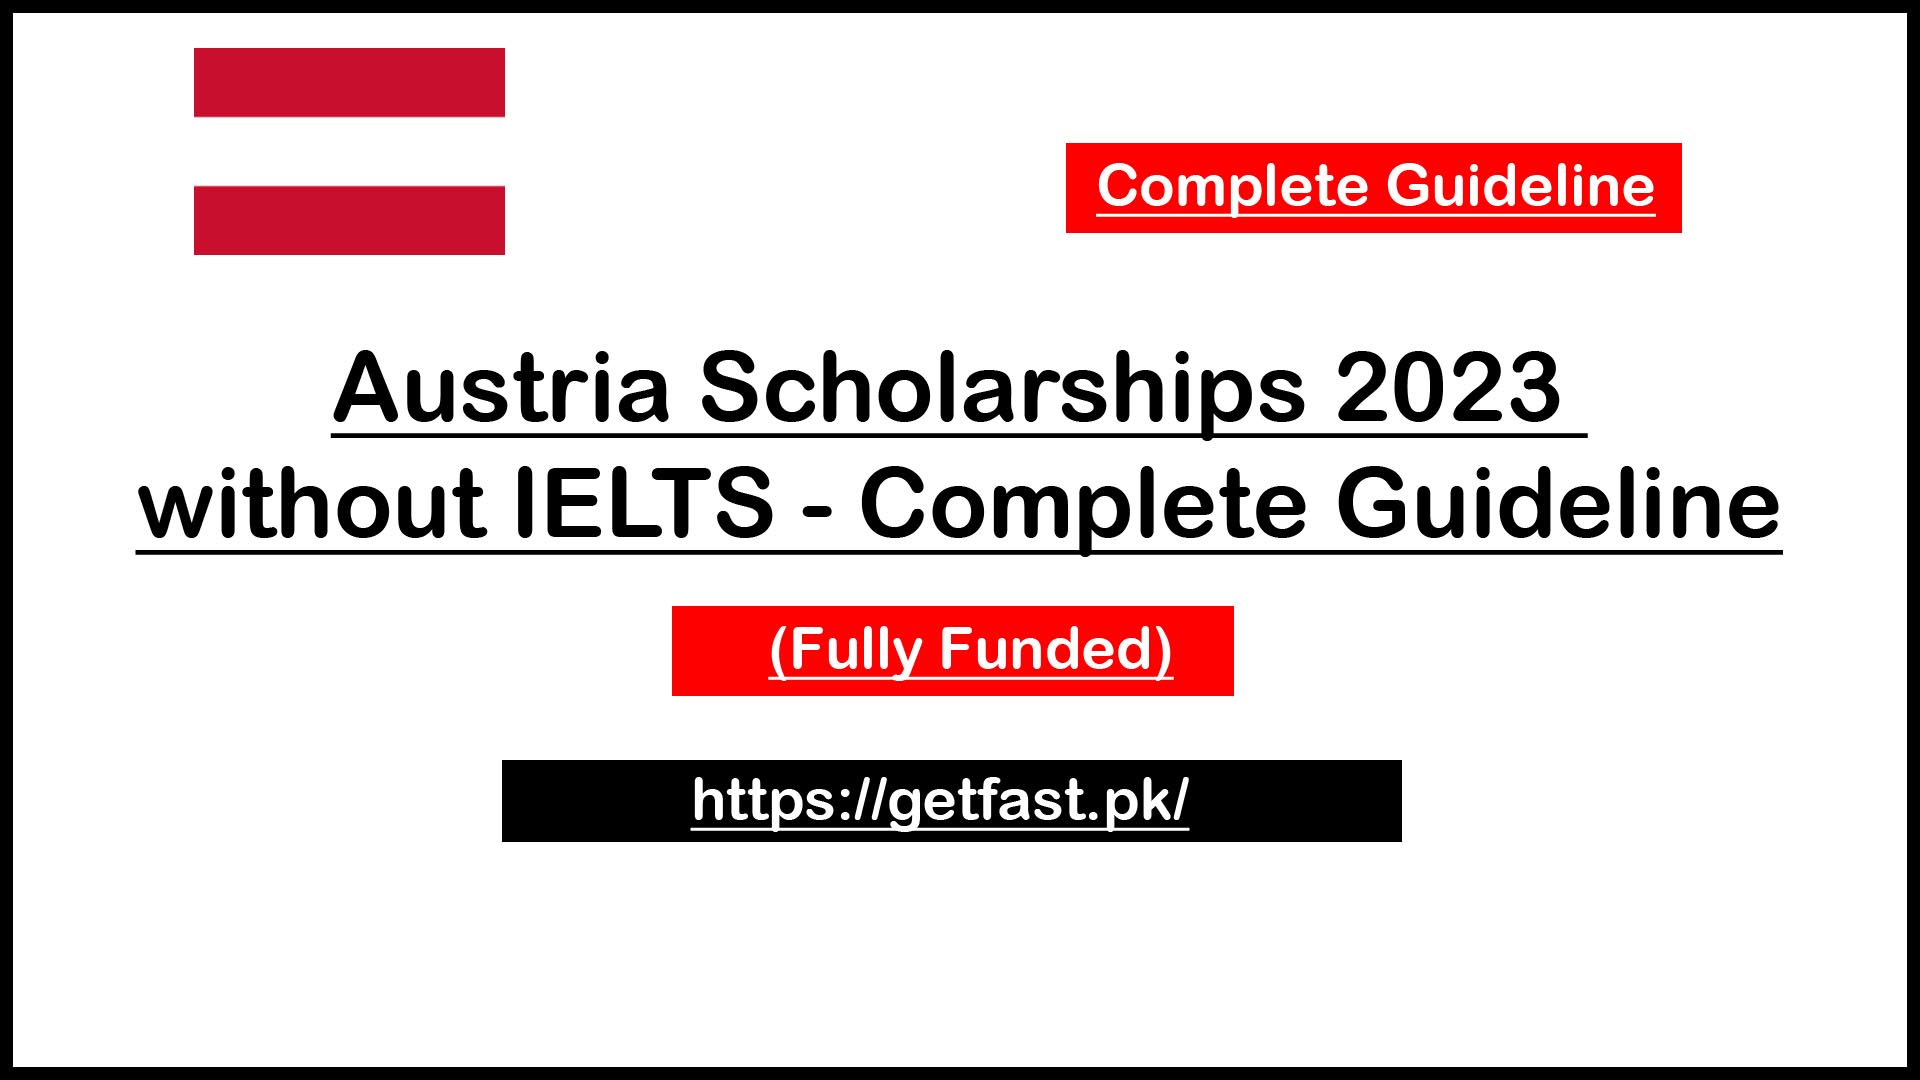 Austria Scholarships 2023